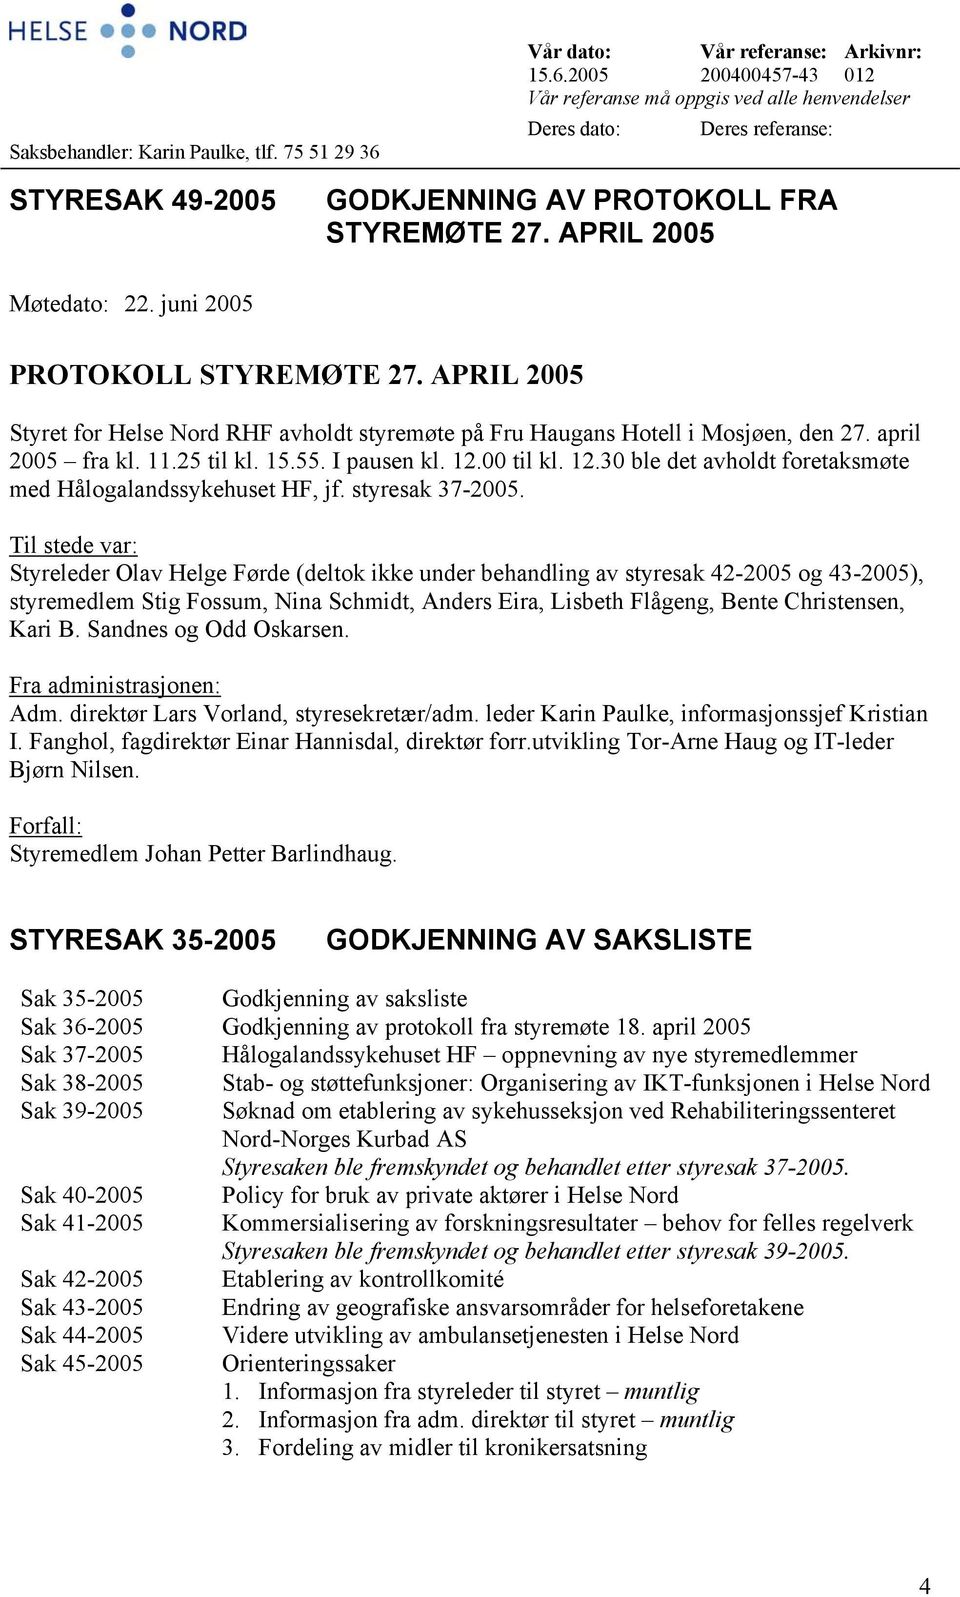 APRIL 2005 Møtedato: 22. juni 2005 PROTOKOLL STYREMØTE 27. APRIL 2005 Styret for Helse Nord RHF avholdt styremøte på Fru Haugans Hotell i Mosjøen, den 27. april 2005 fra kl. 11.25 til kl. 15.55.